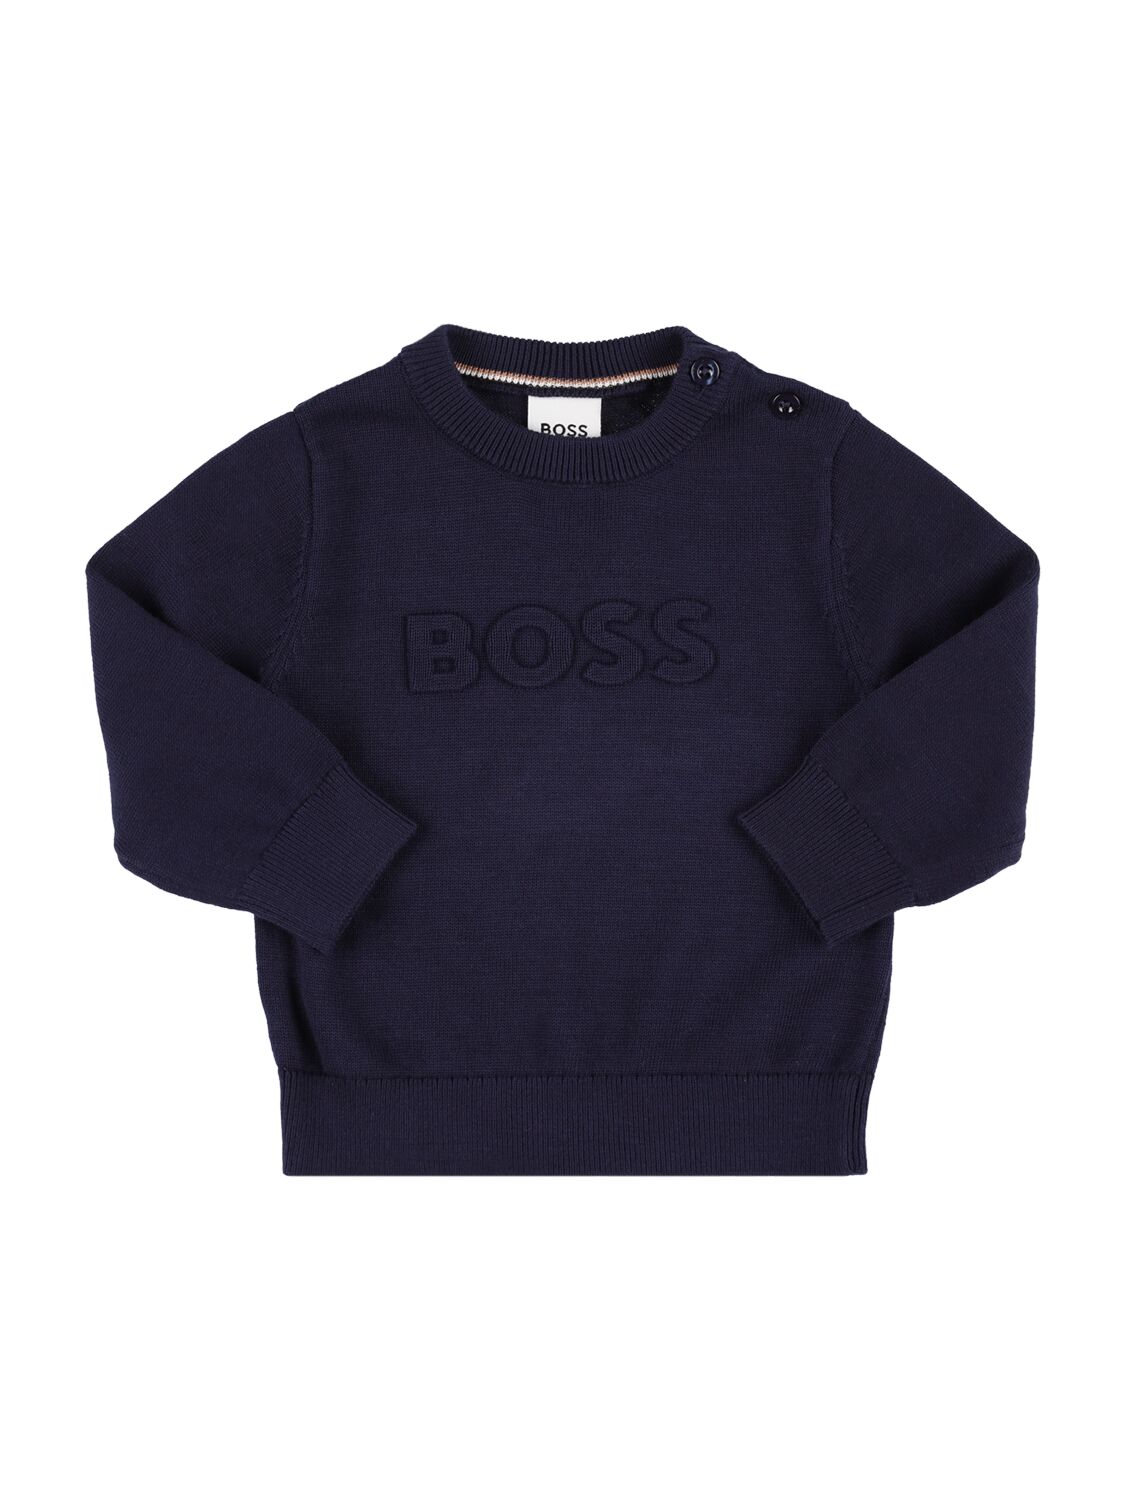 Hugo Boss Kids' Embossed Logo Cotton Knit Sweater In Navy